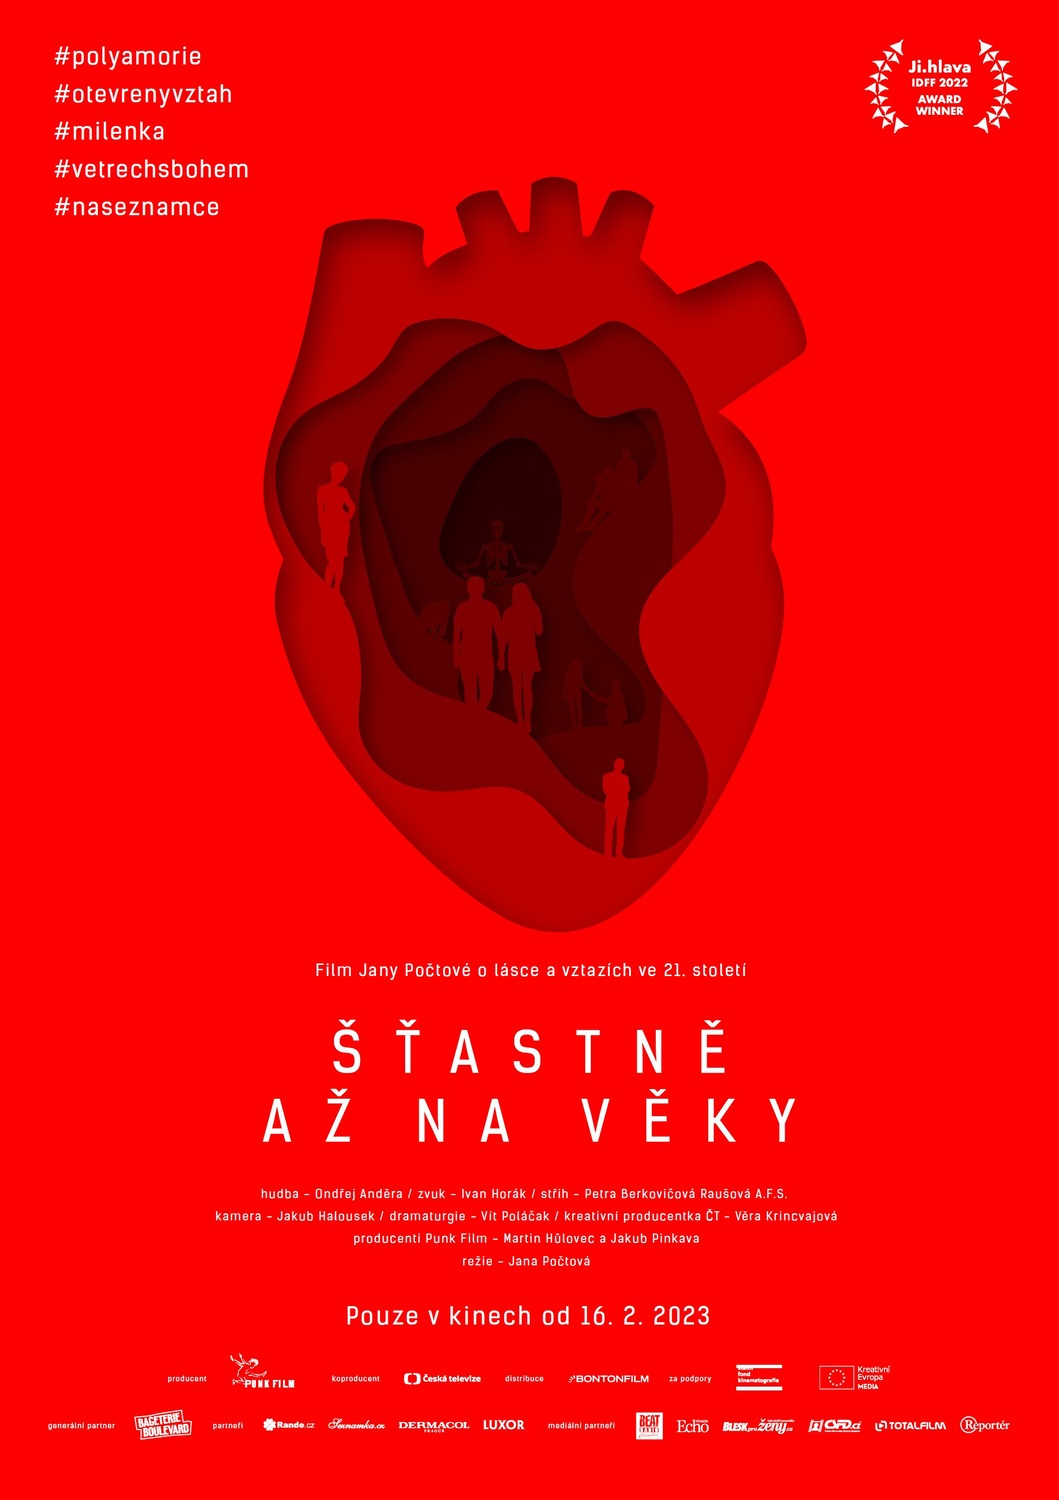 Extra Large Movie Poster Image for Stastne az na veky 